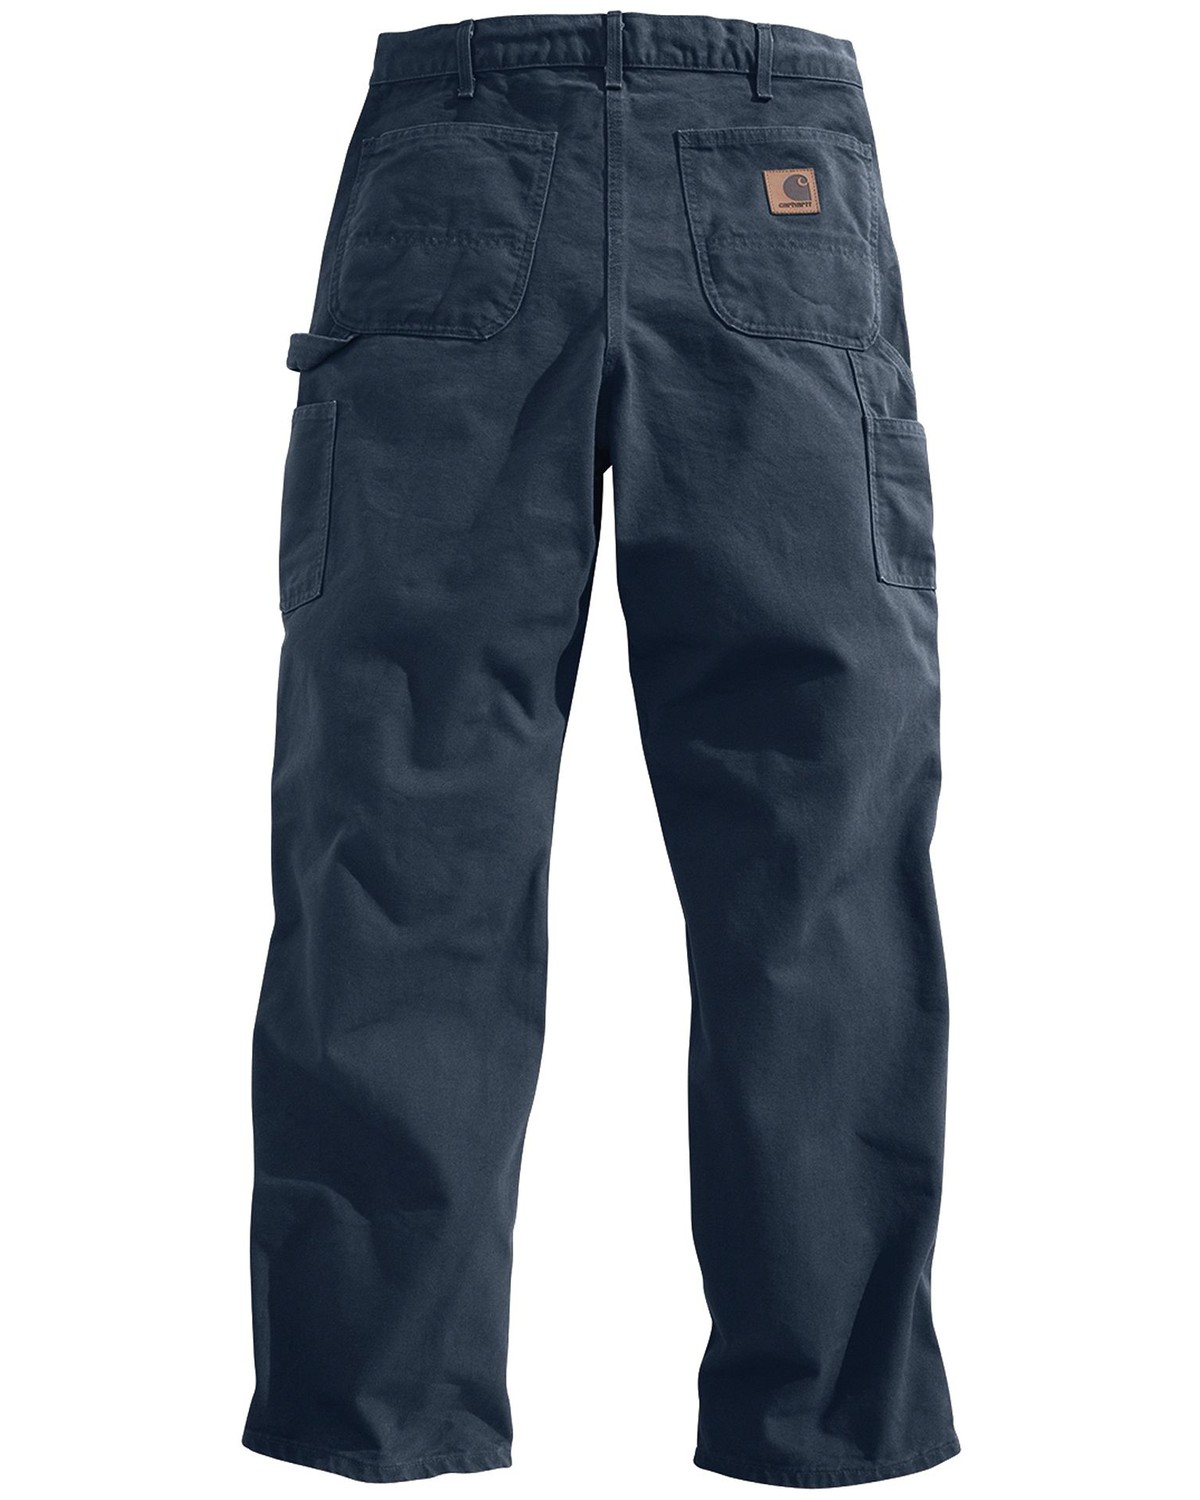 navy blue carhartt work pants